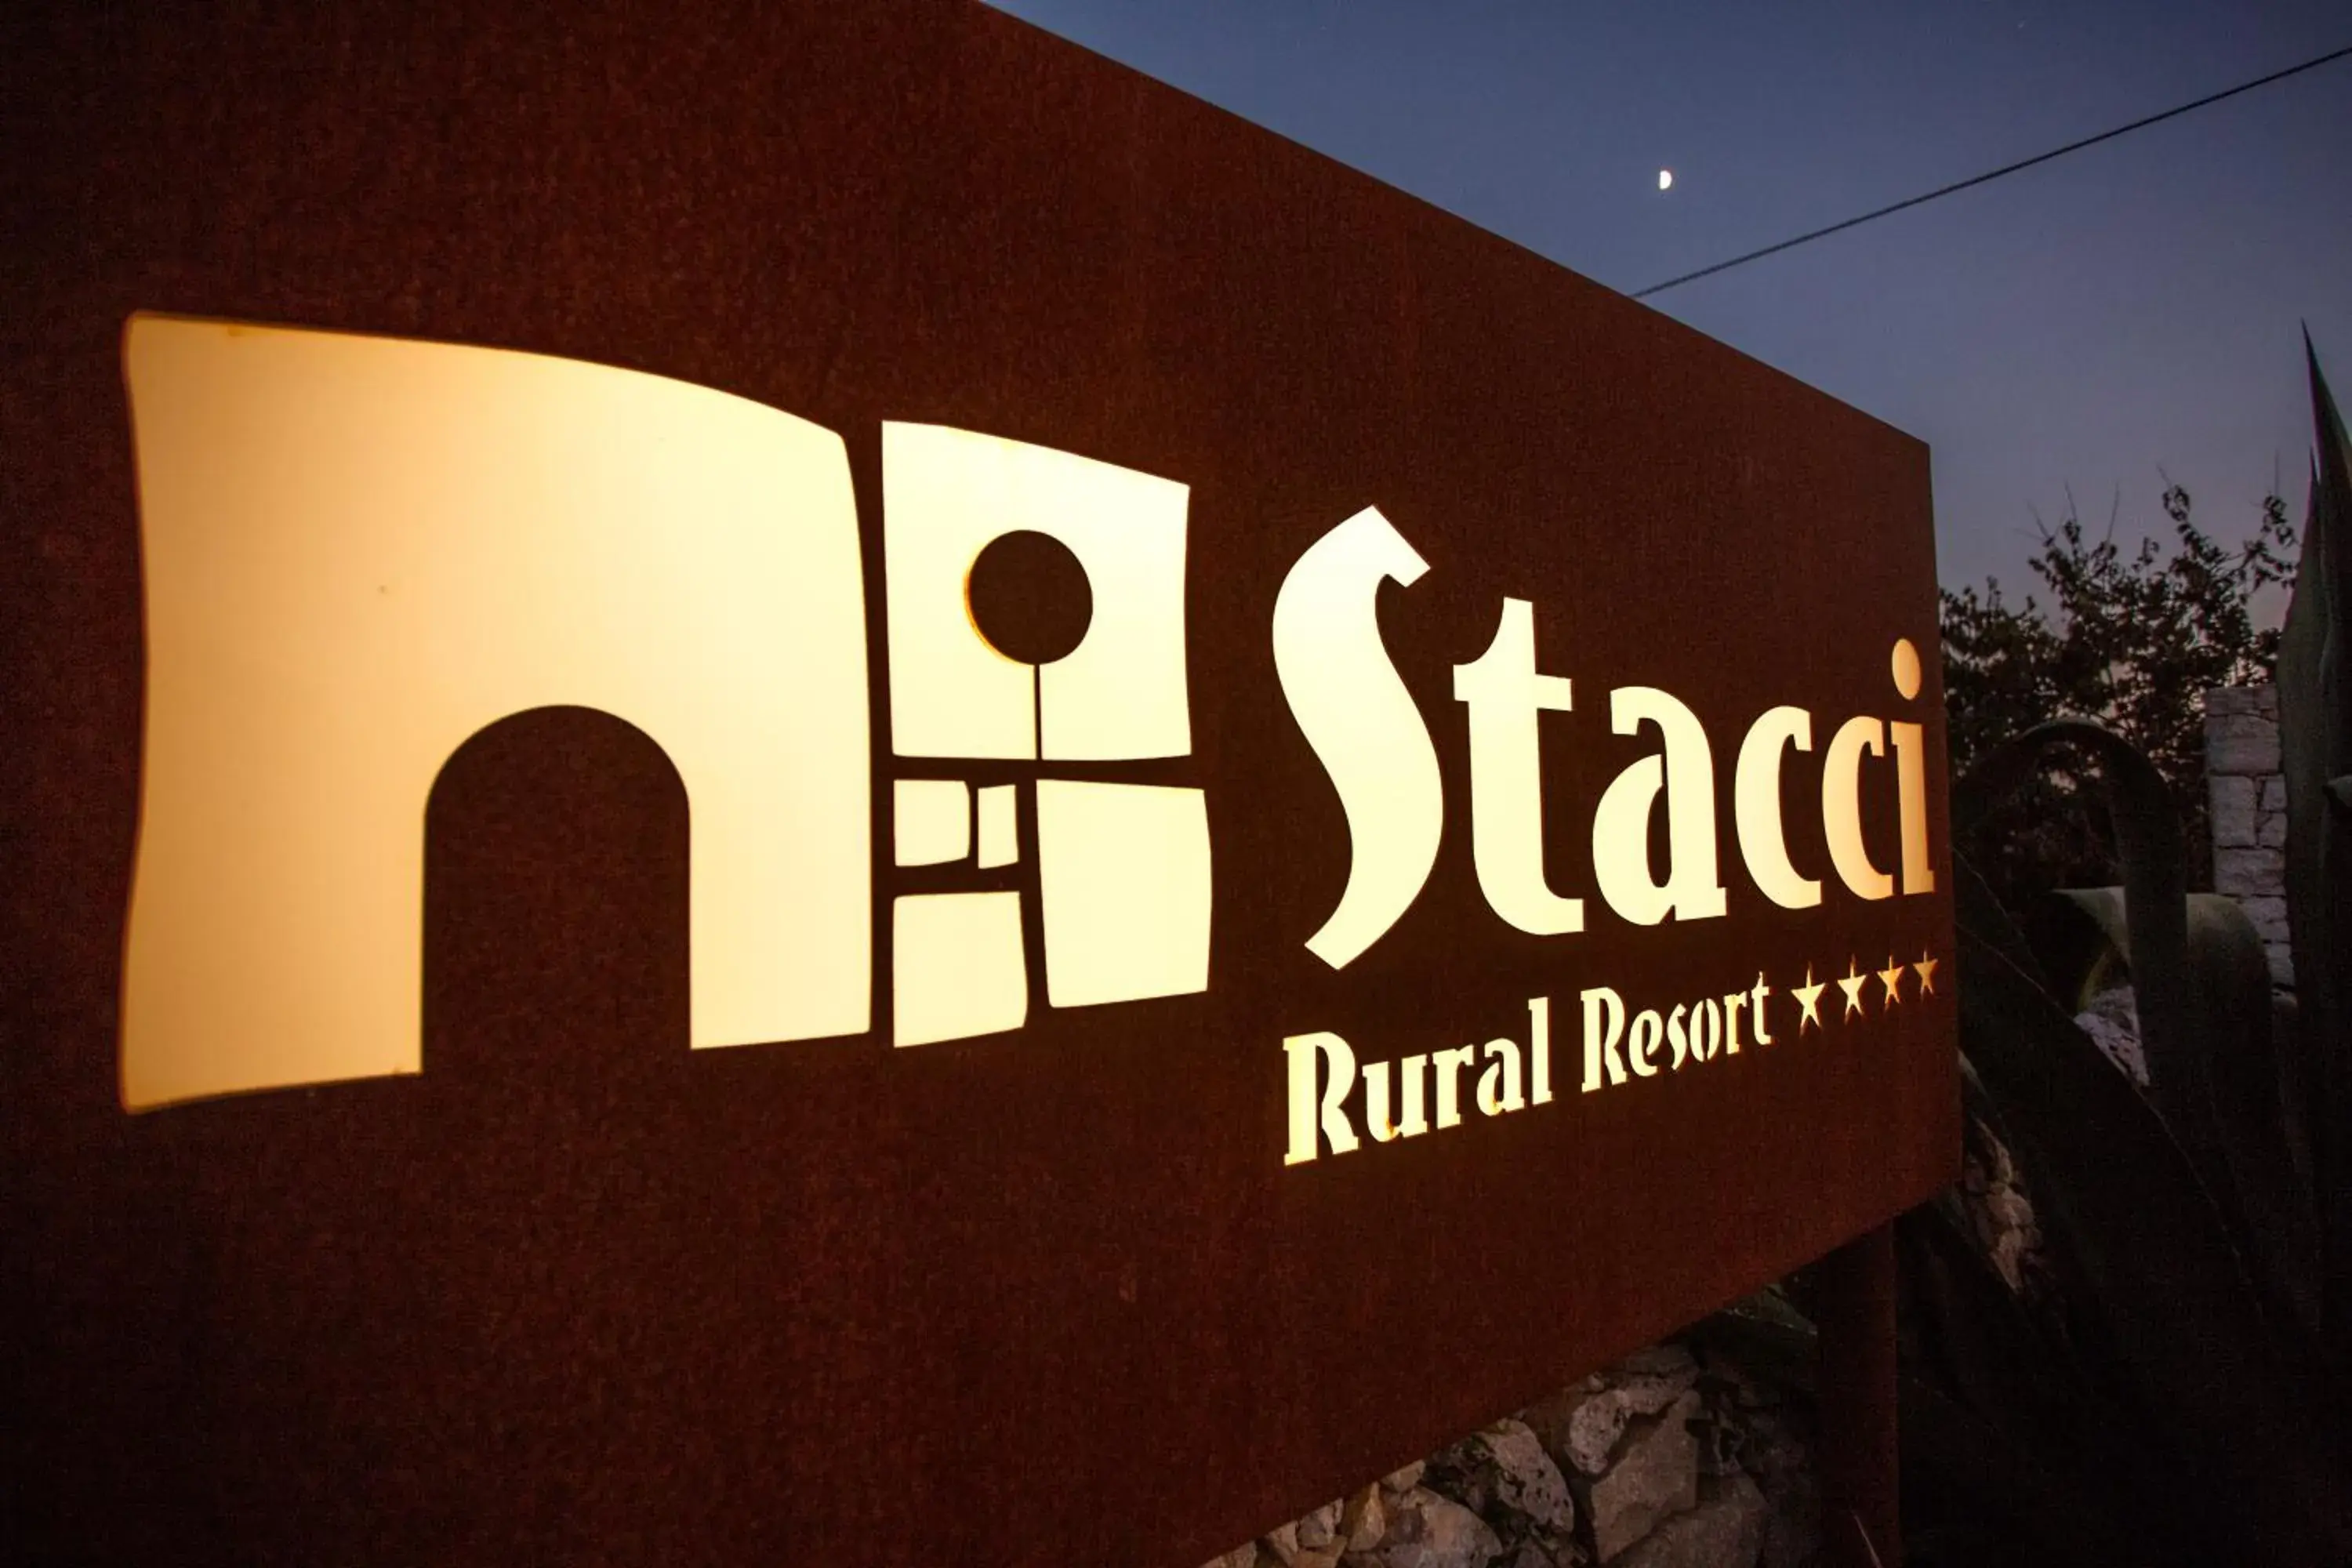 Property logo or sign in Stacci Rural Resort